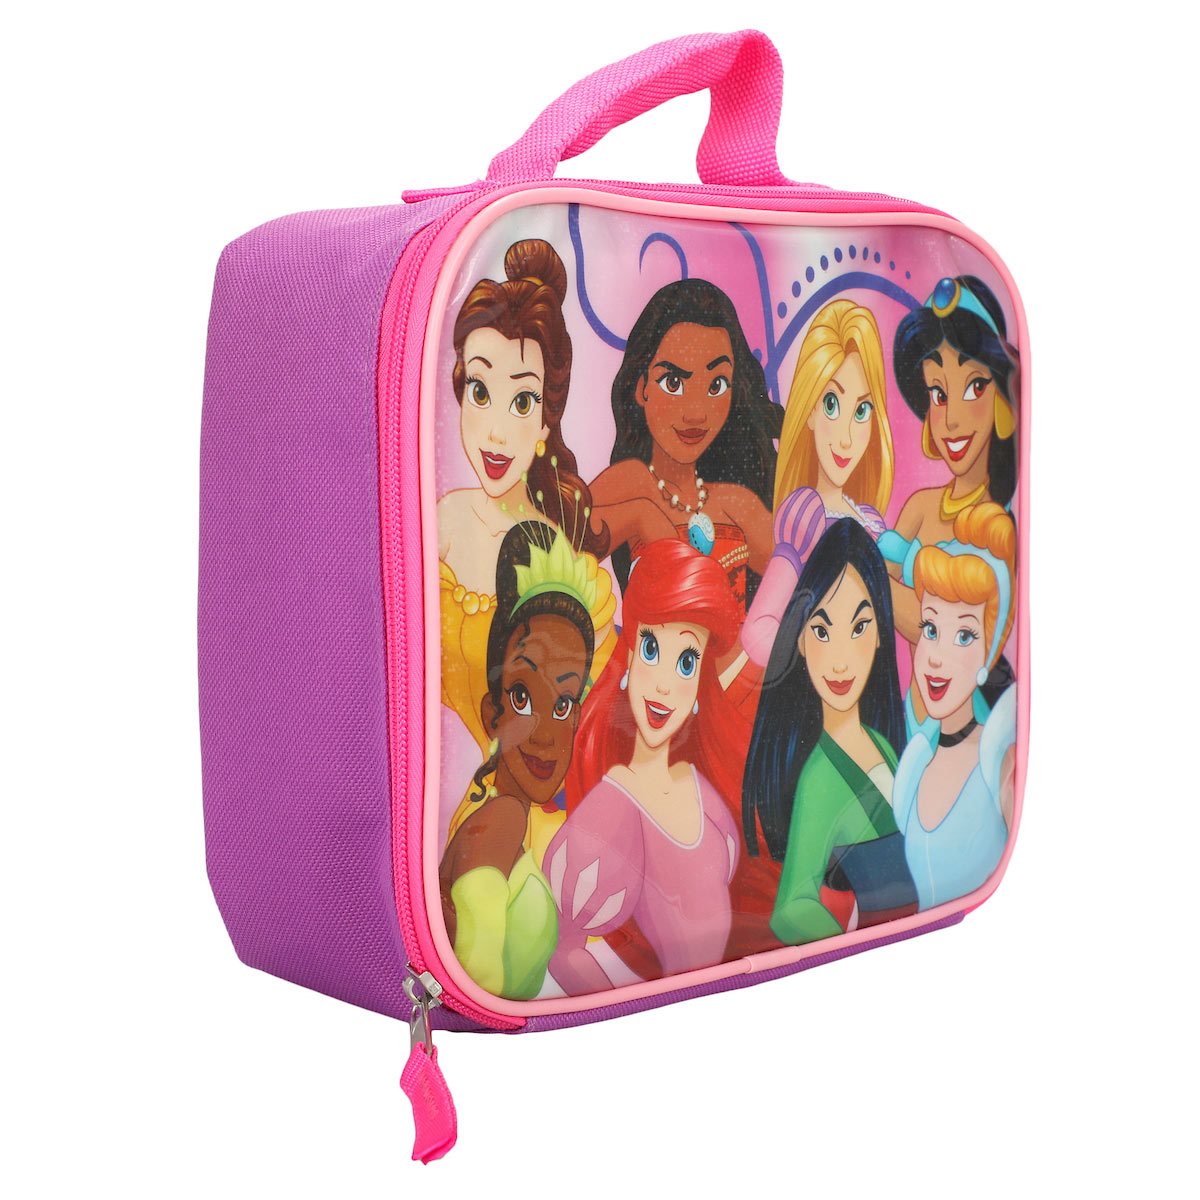 Disney Princess, Ariel, Belle and Rapunzel Metal Lunch Box